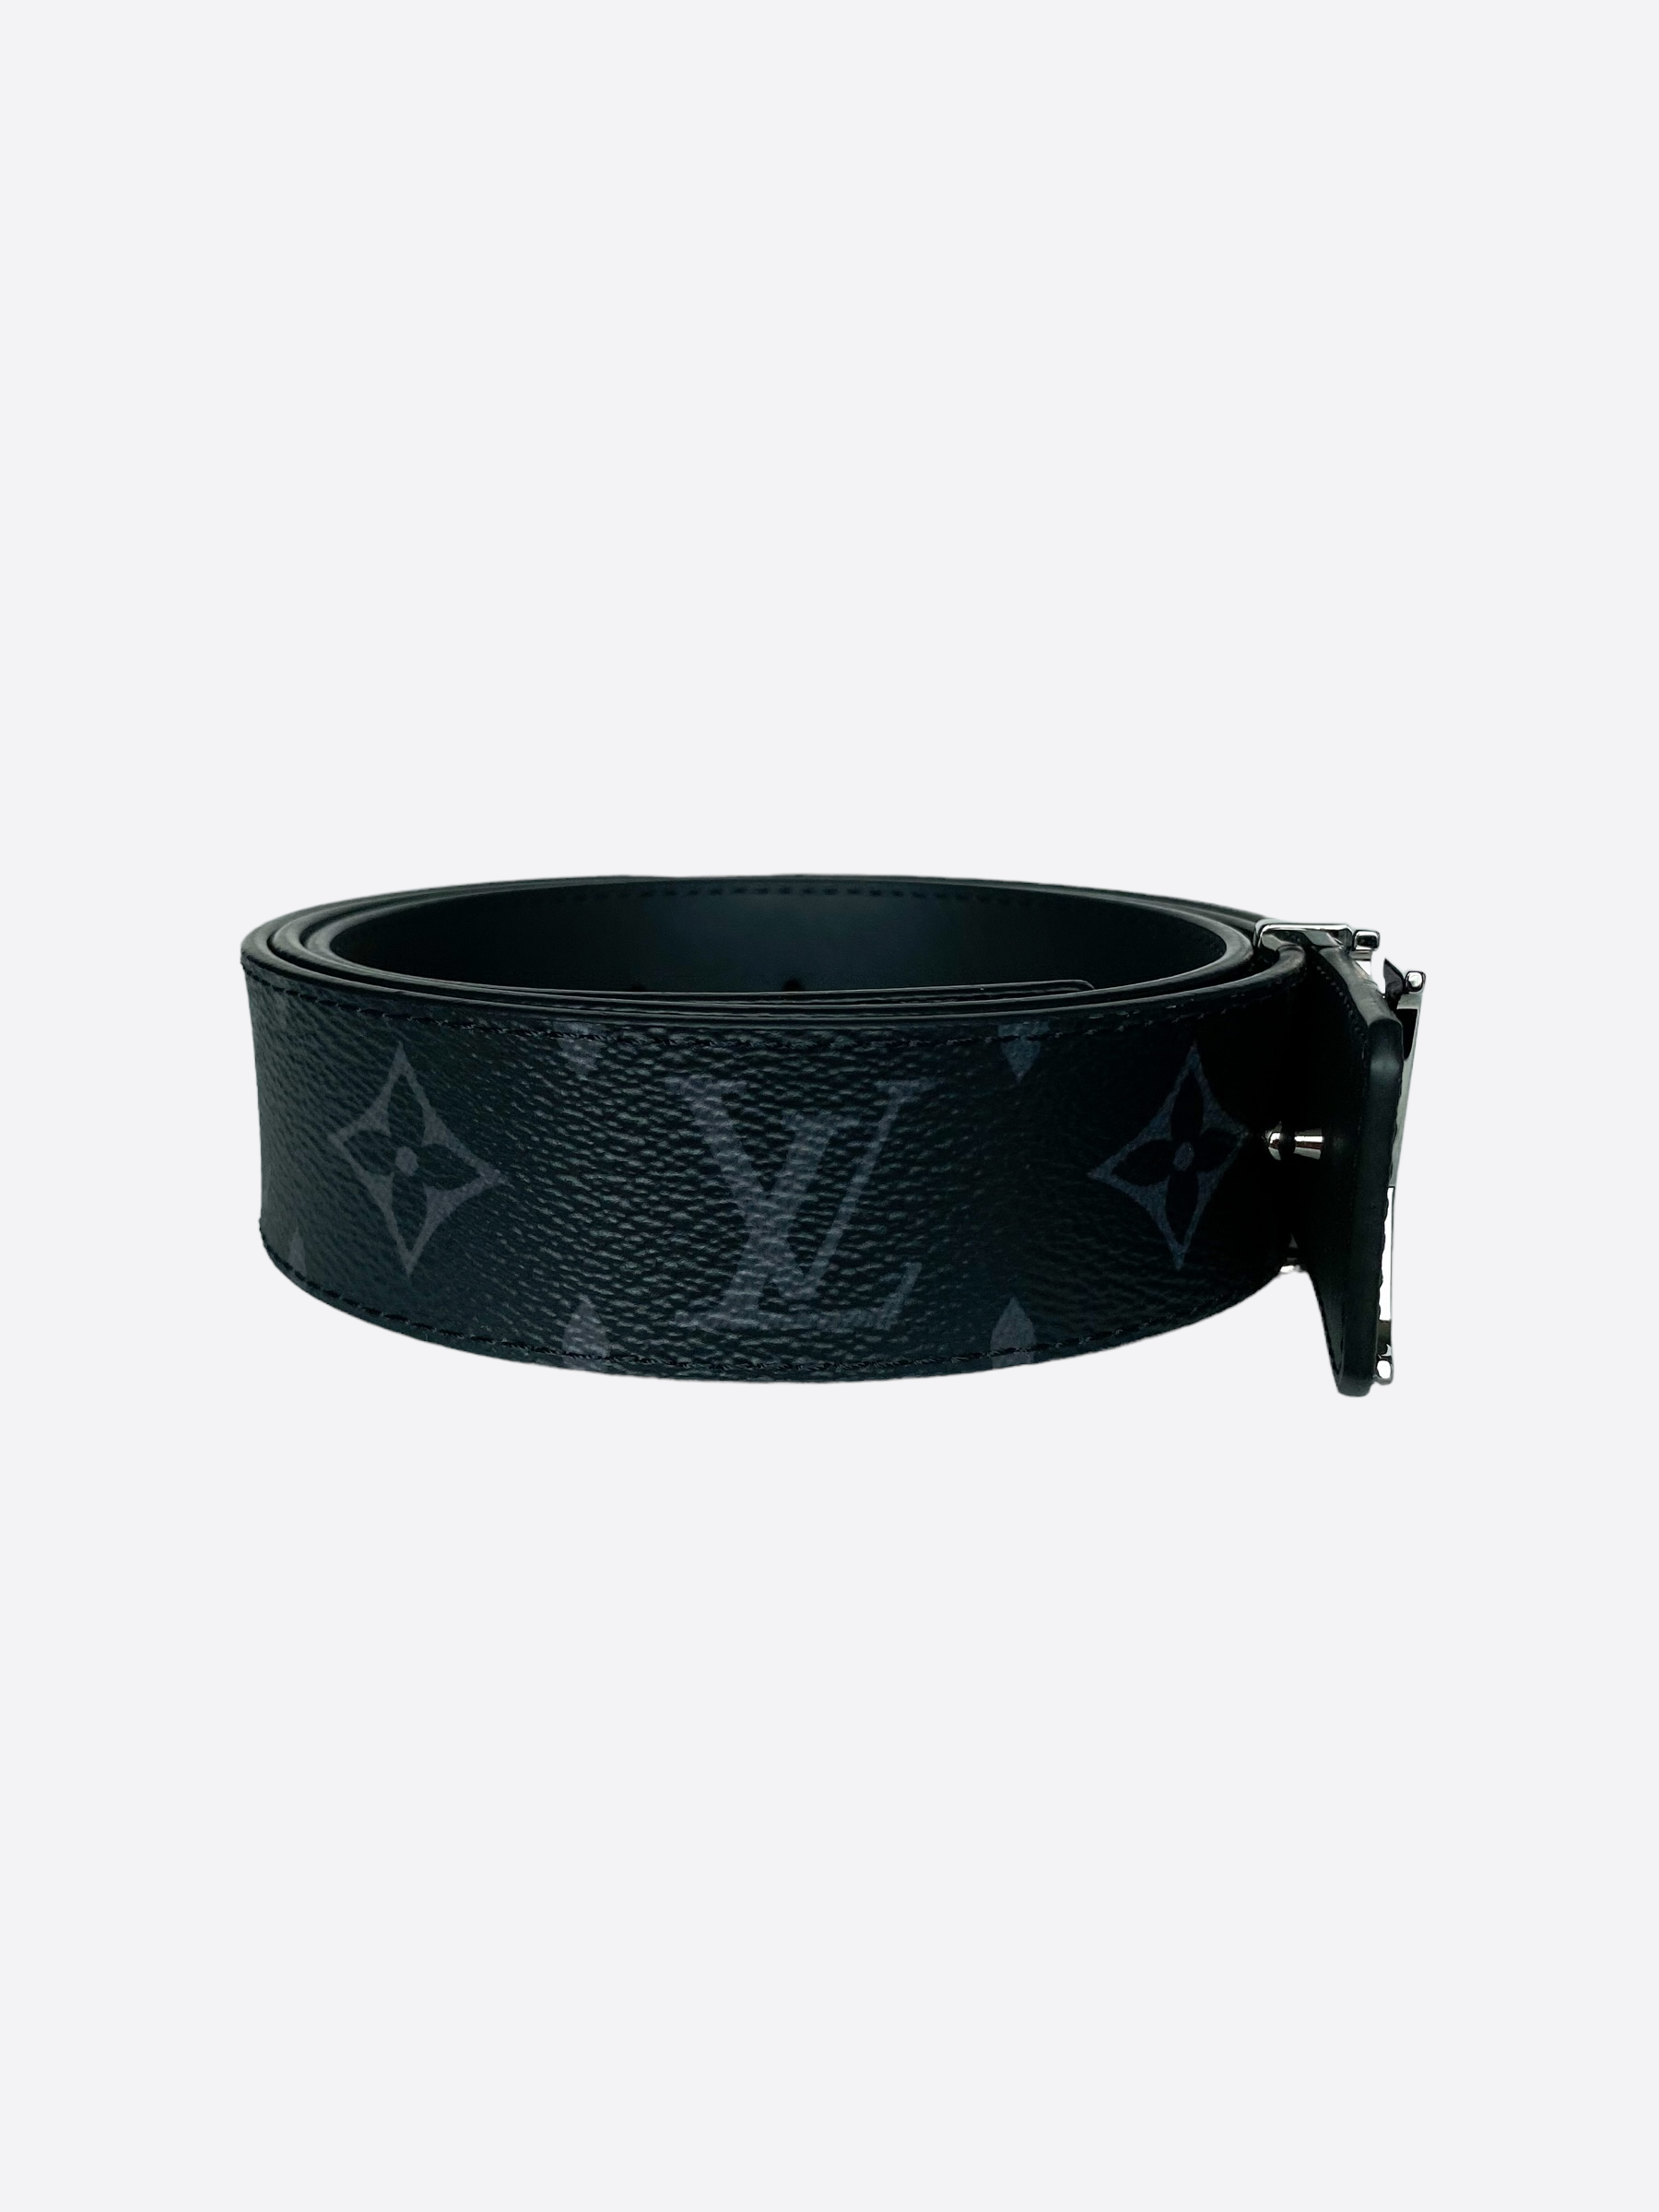 Louis Vuitton Shape Belt Monogram 40mm Brown